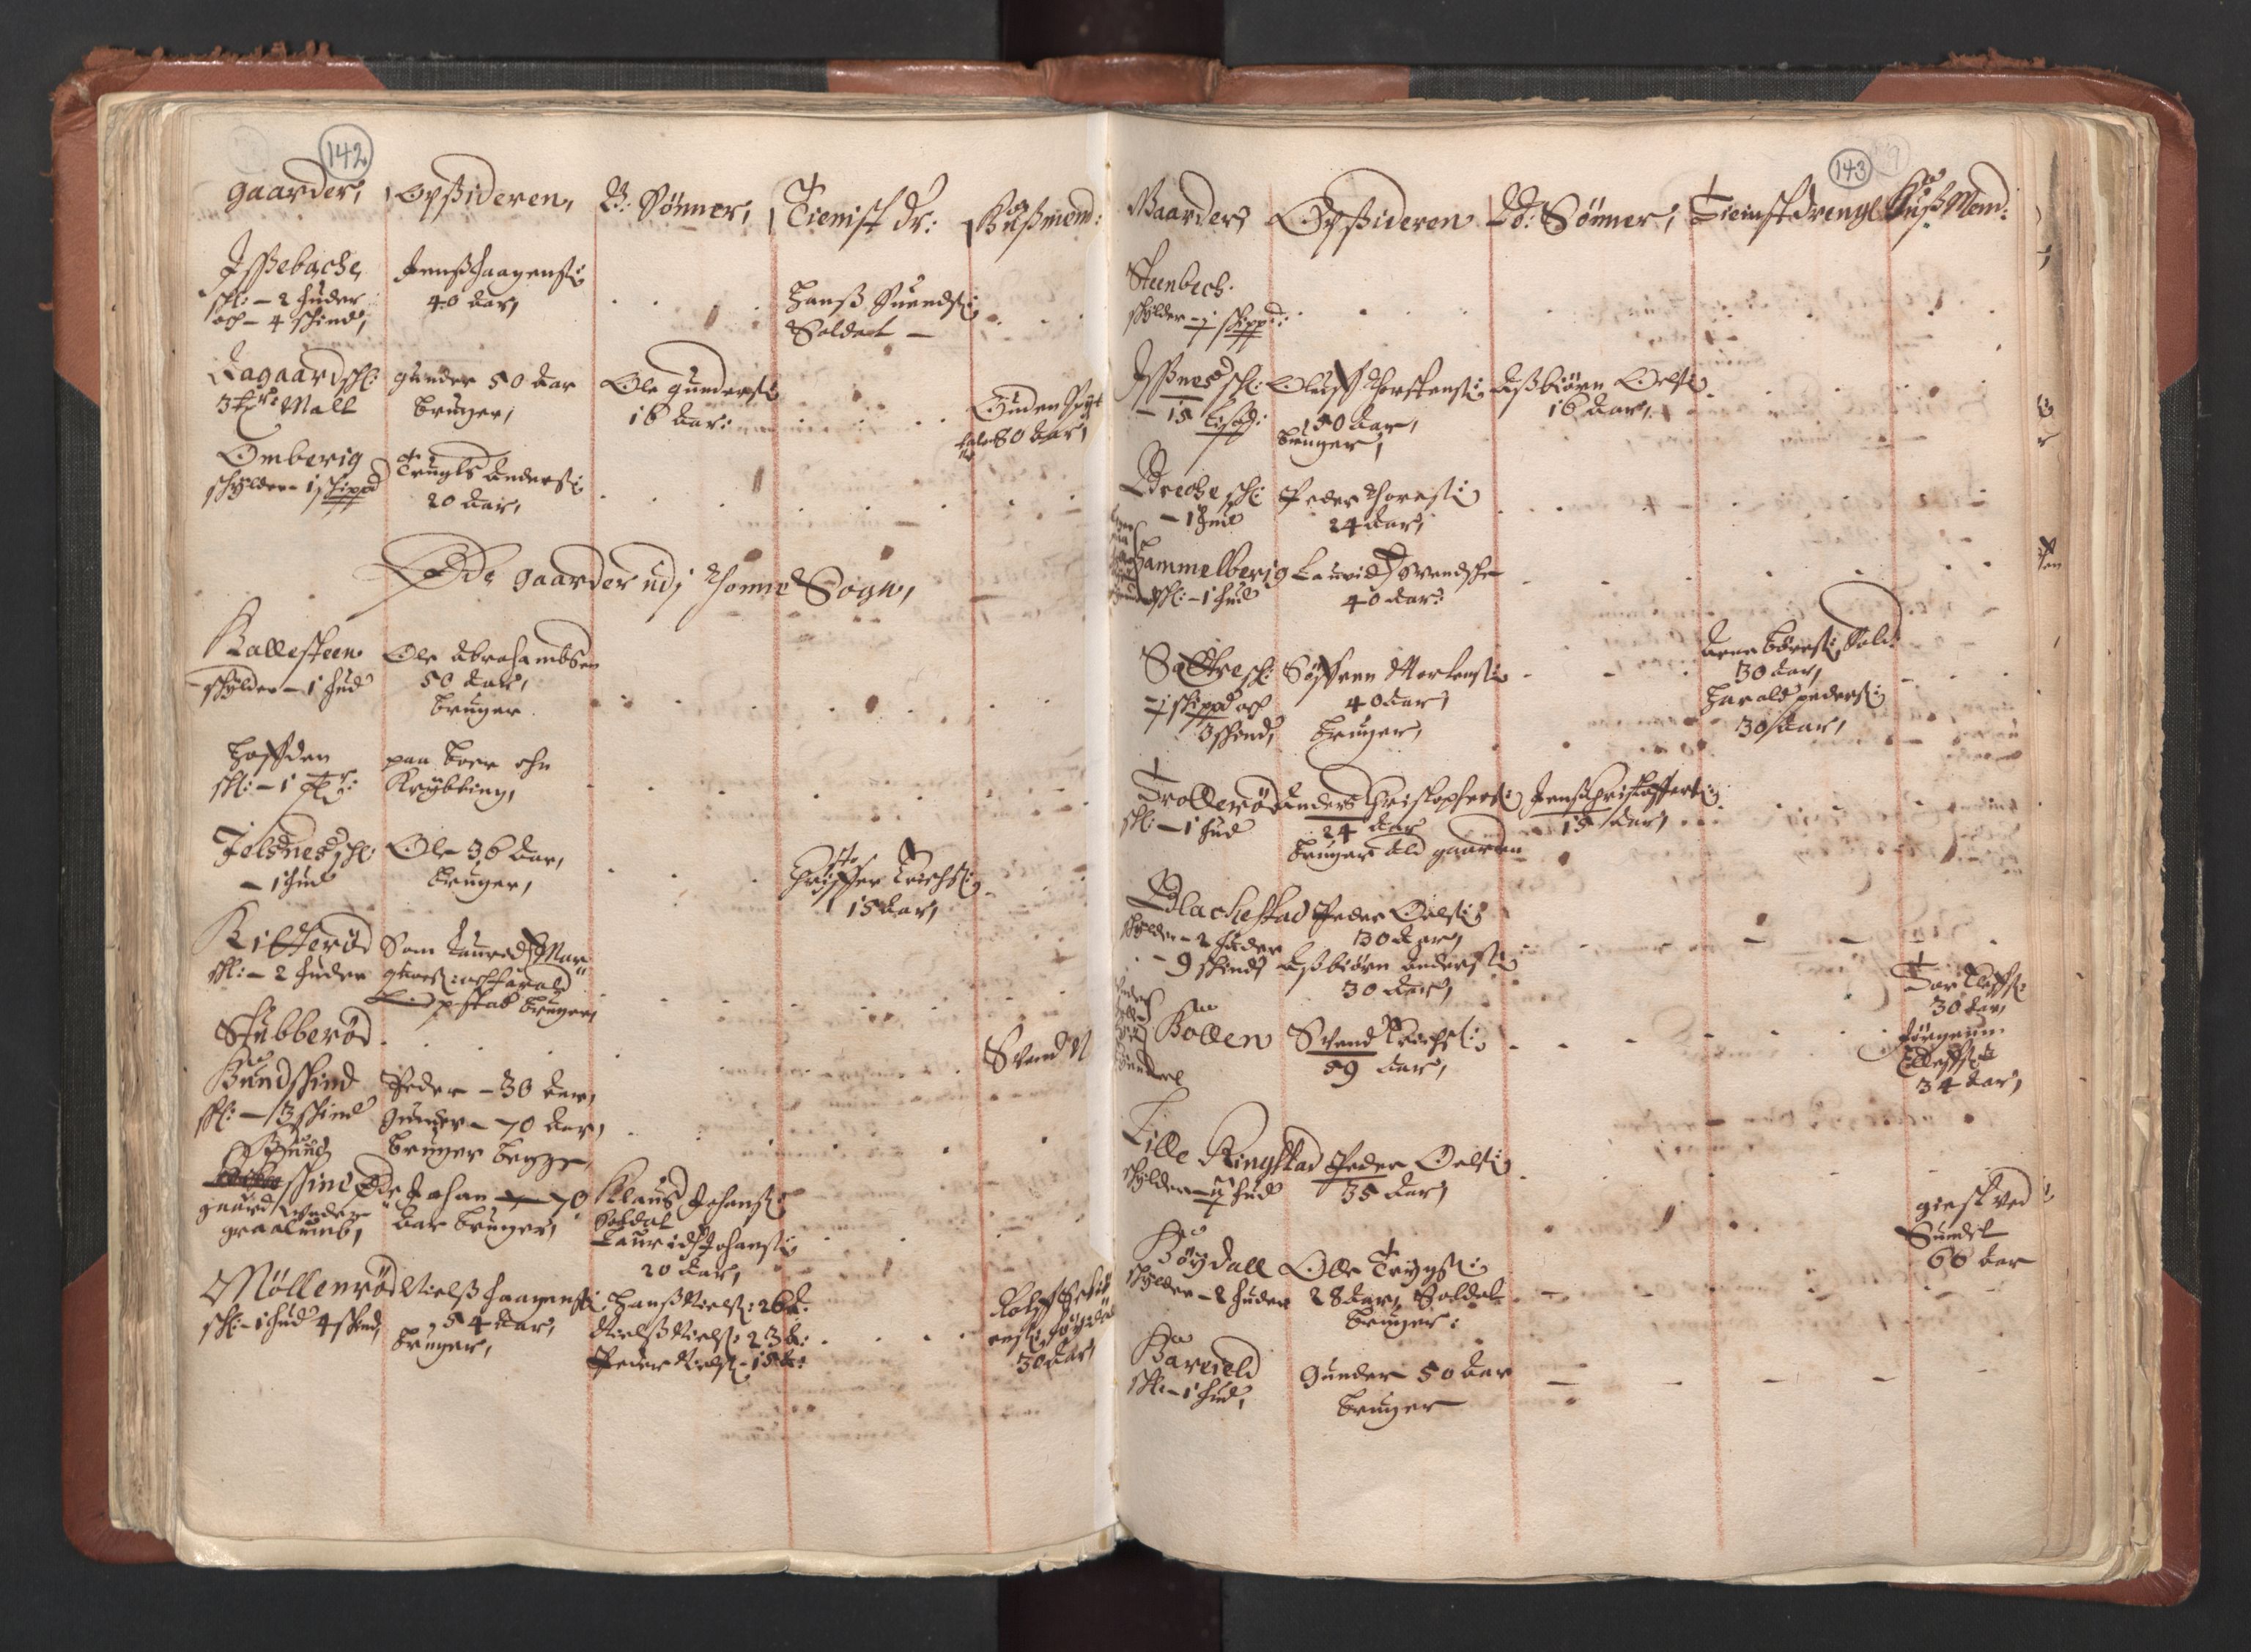 RA, Fogdenes og sorenskrivernes manntall 1664-1666, nr. 1: Fogderier (len og skipreider) i nåværende Østfold fylke, 1664, s. 142-143